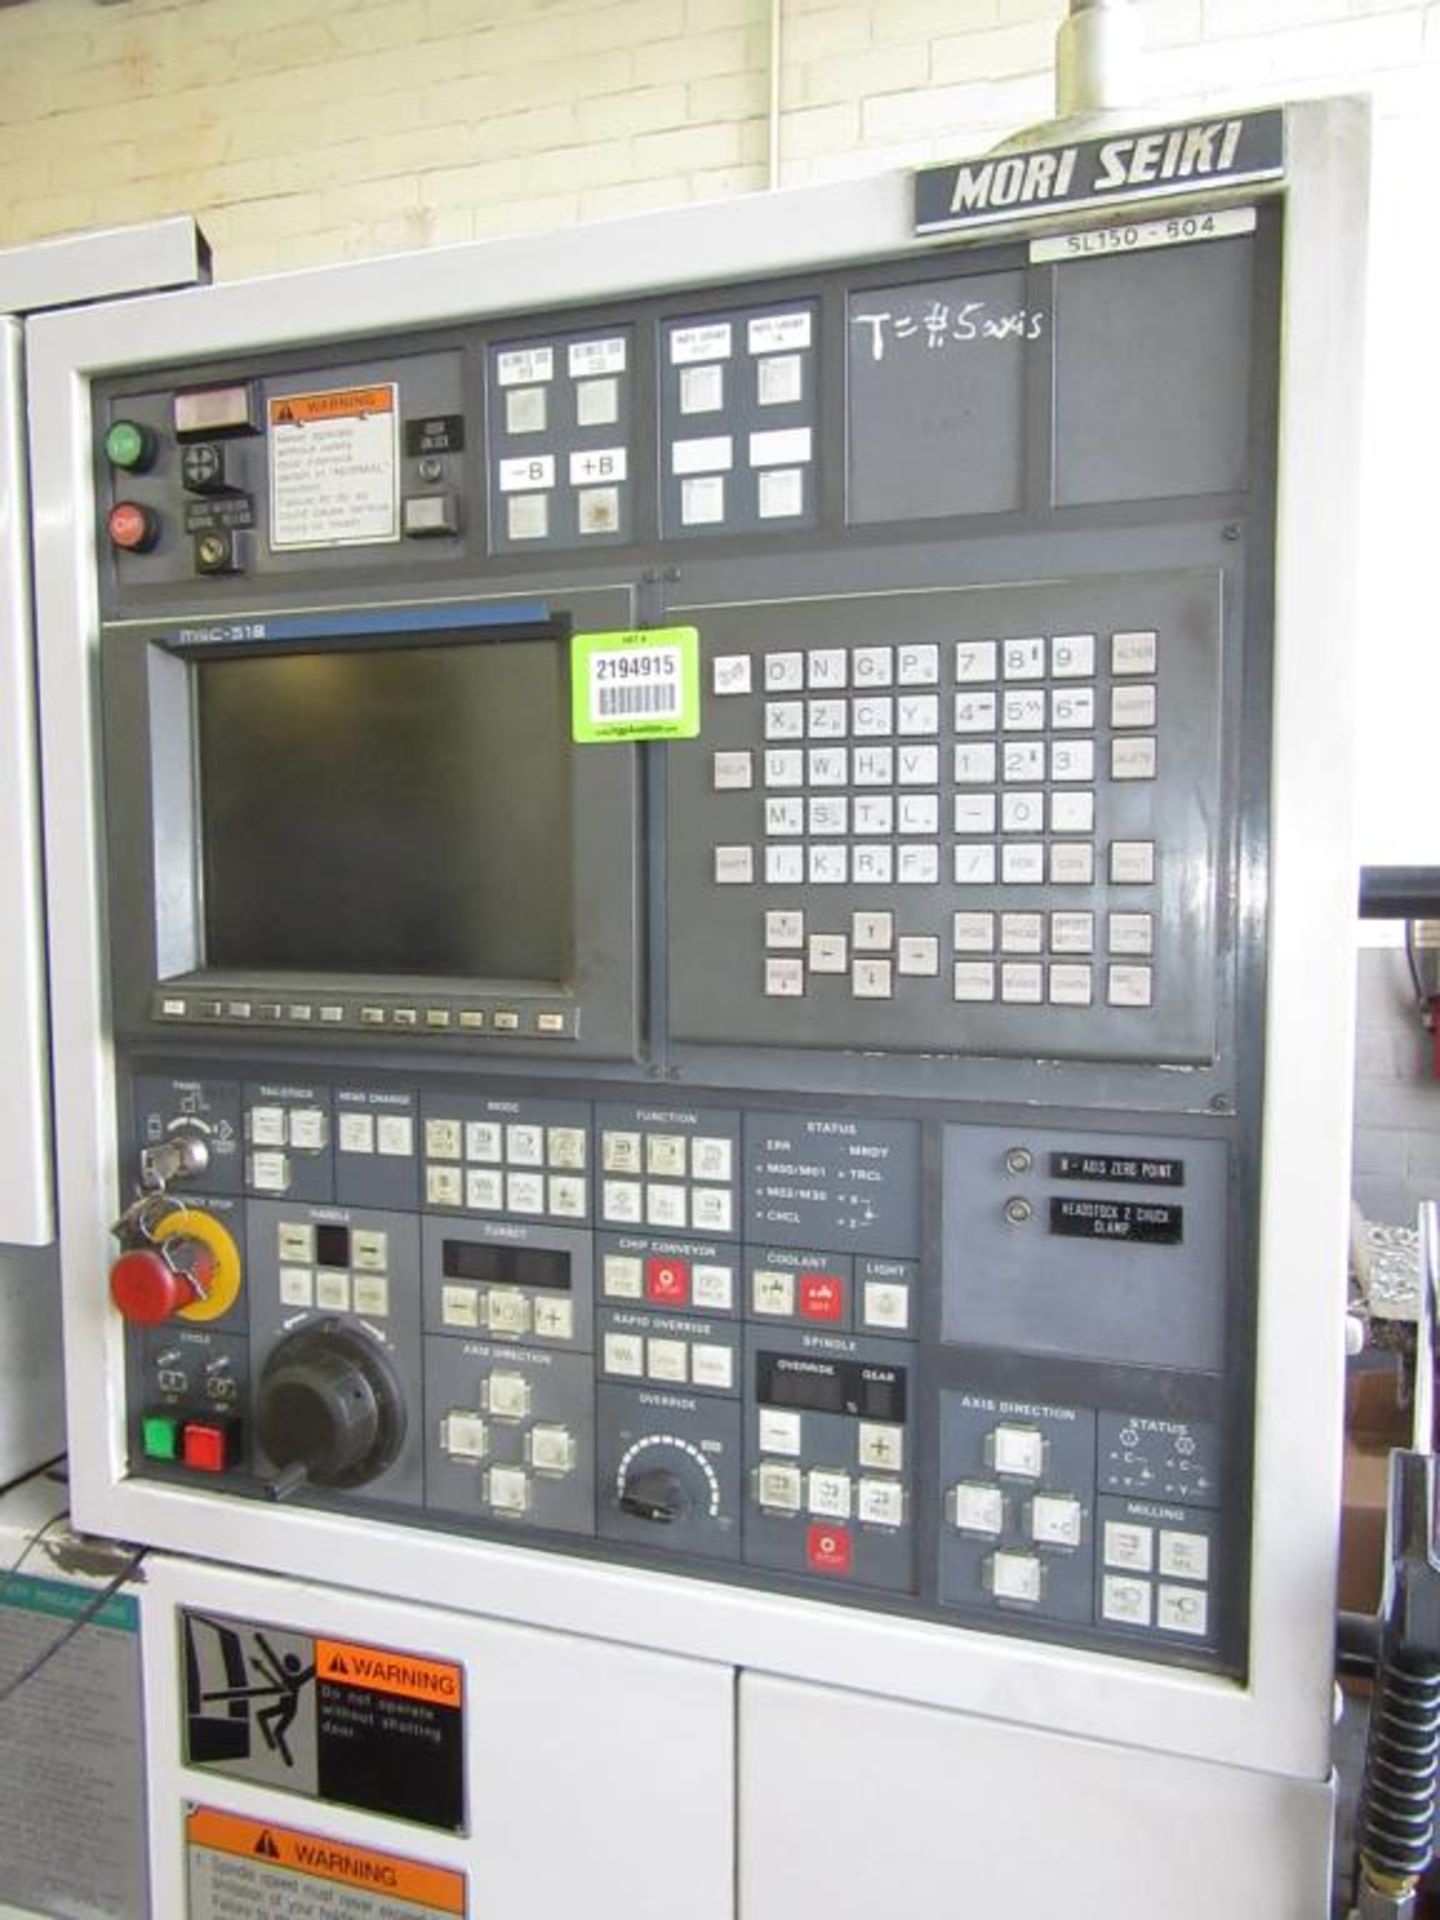 Mori Seiki SL-150 1997 - CNC Lathe with MSC-518 2-Axis Control Panel, (2) Kitagawa 3-Jaw Chucks: (1) - Image 4 of 10